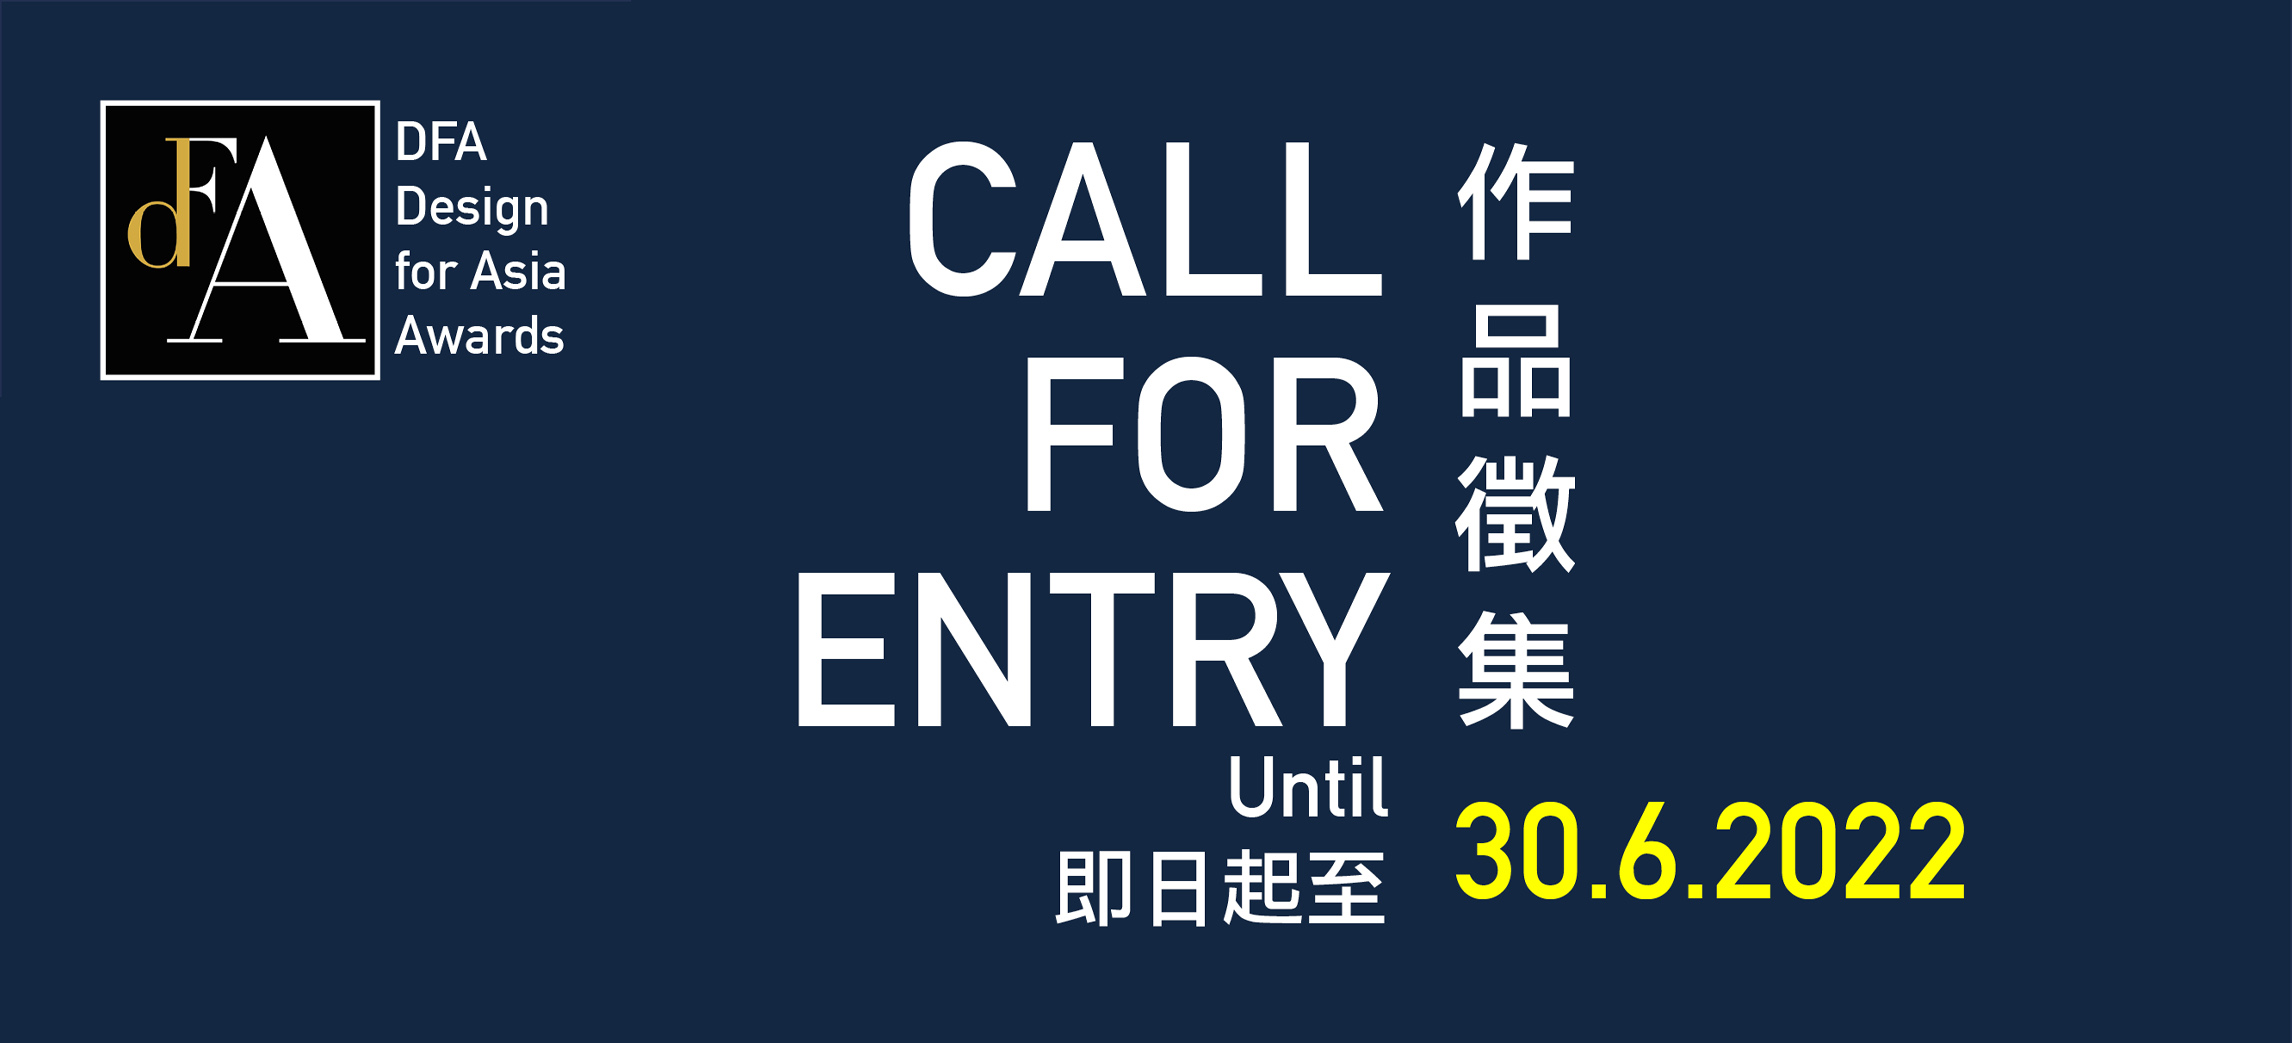 DFA Design for Asia Awards 2022 – Now Open for Entries